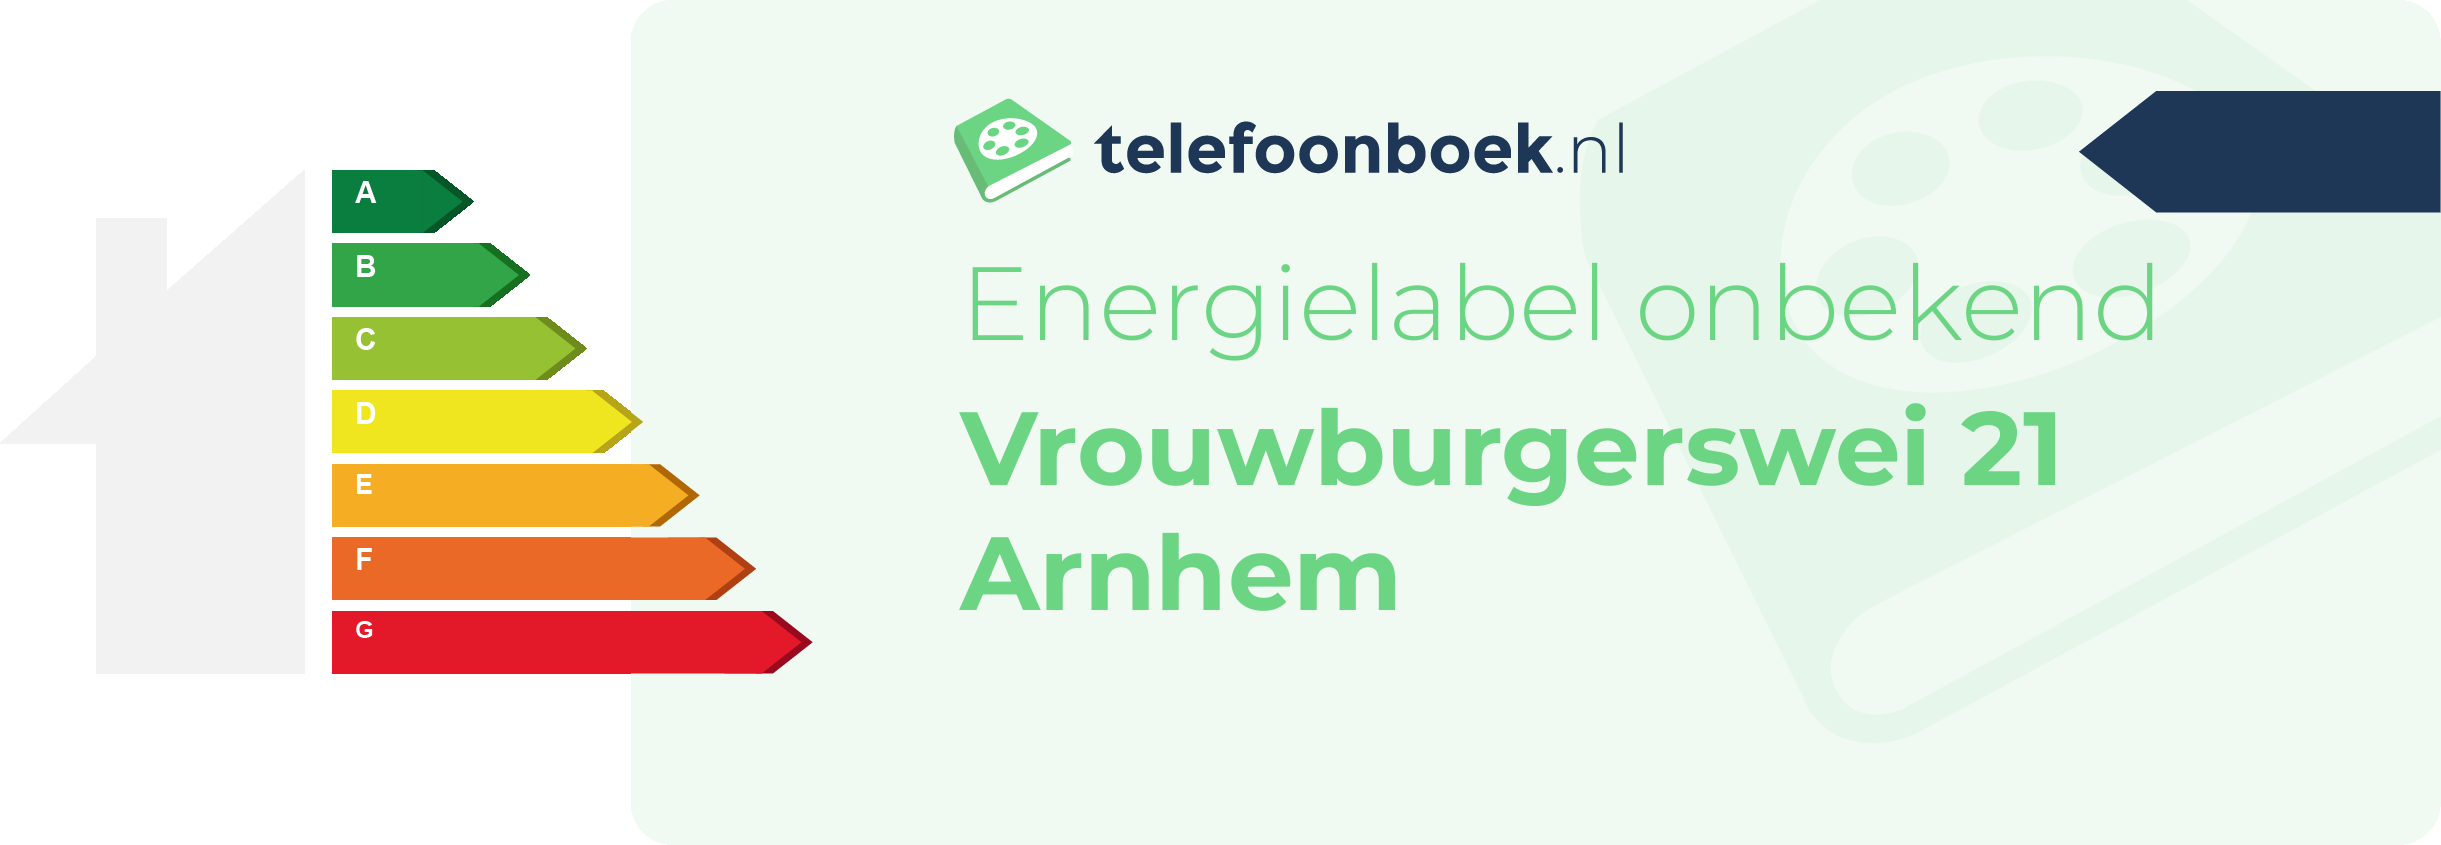 Energielabel Vrouwburgerswei 21 Arnhem